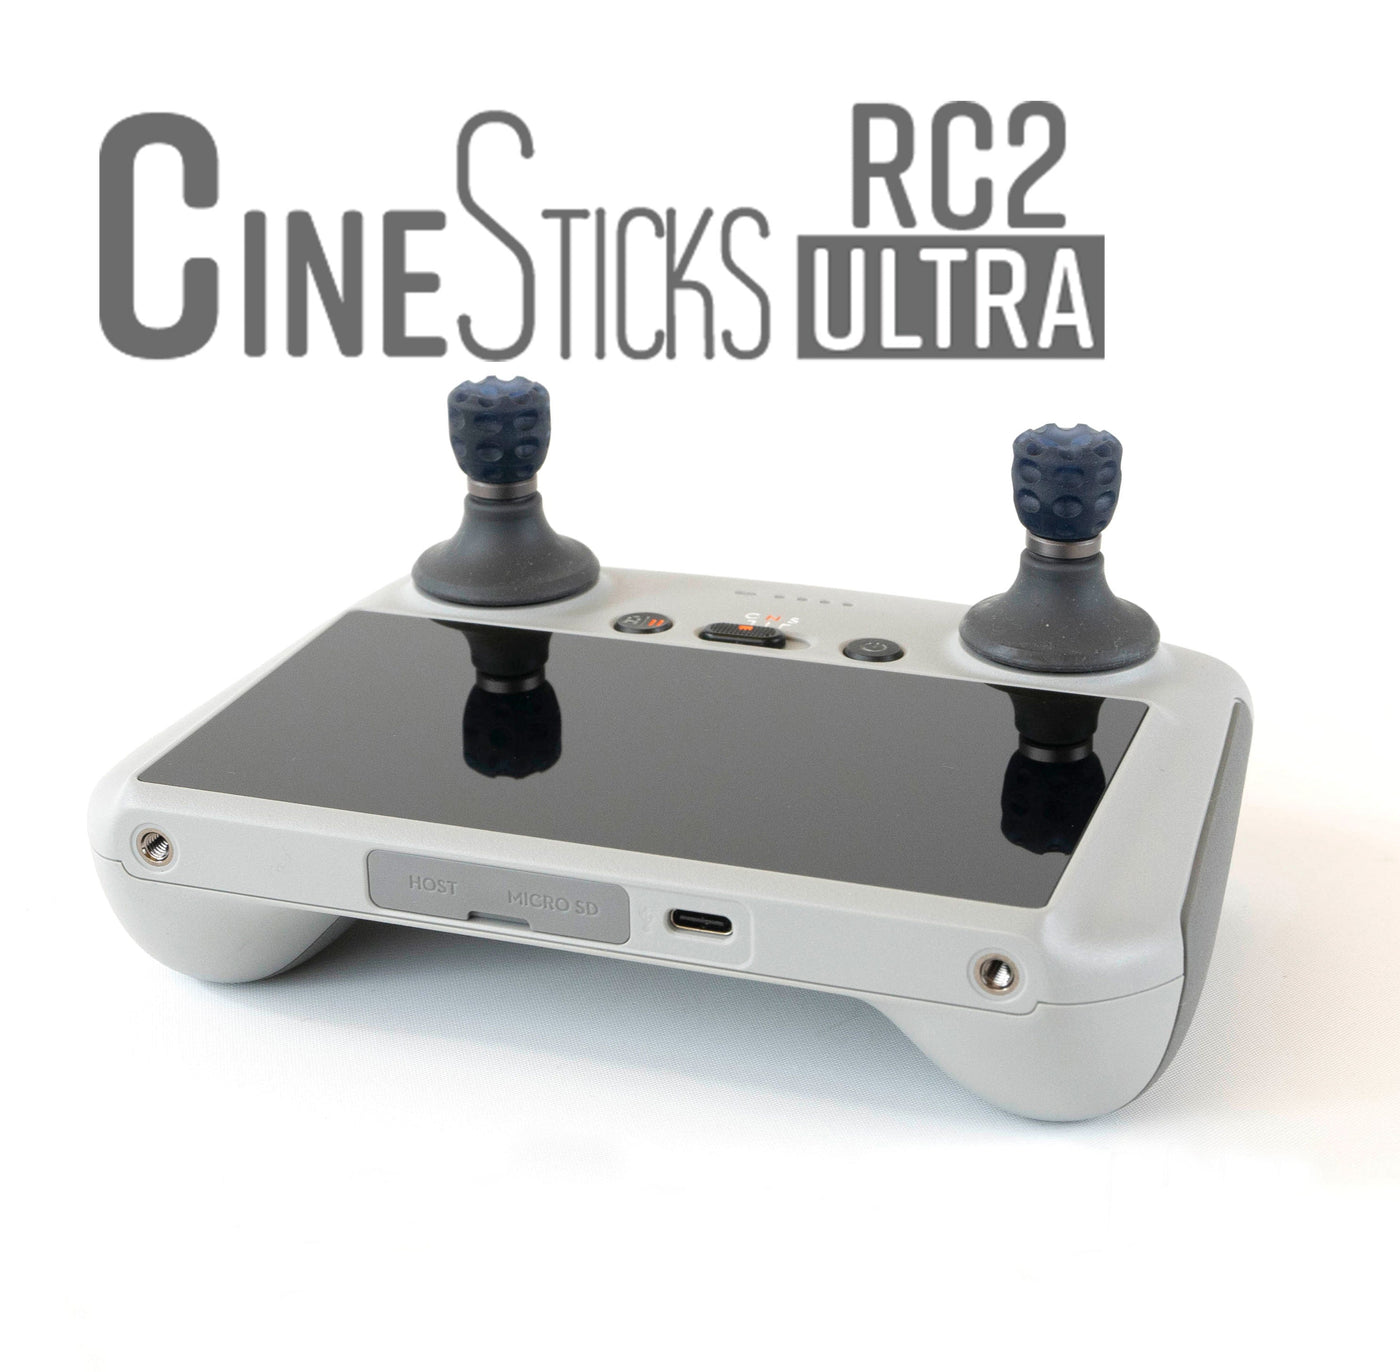 CineSticks RC2 Ultra - US